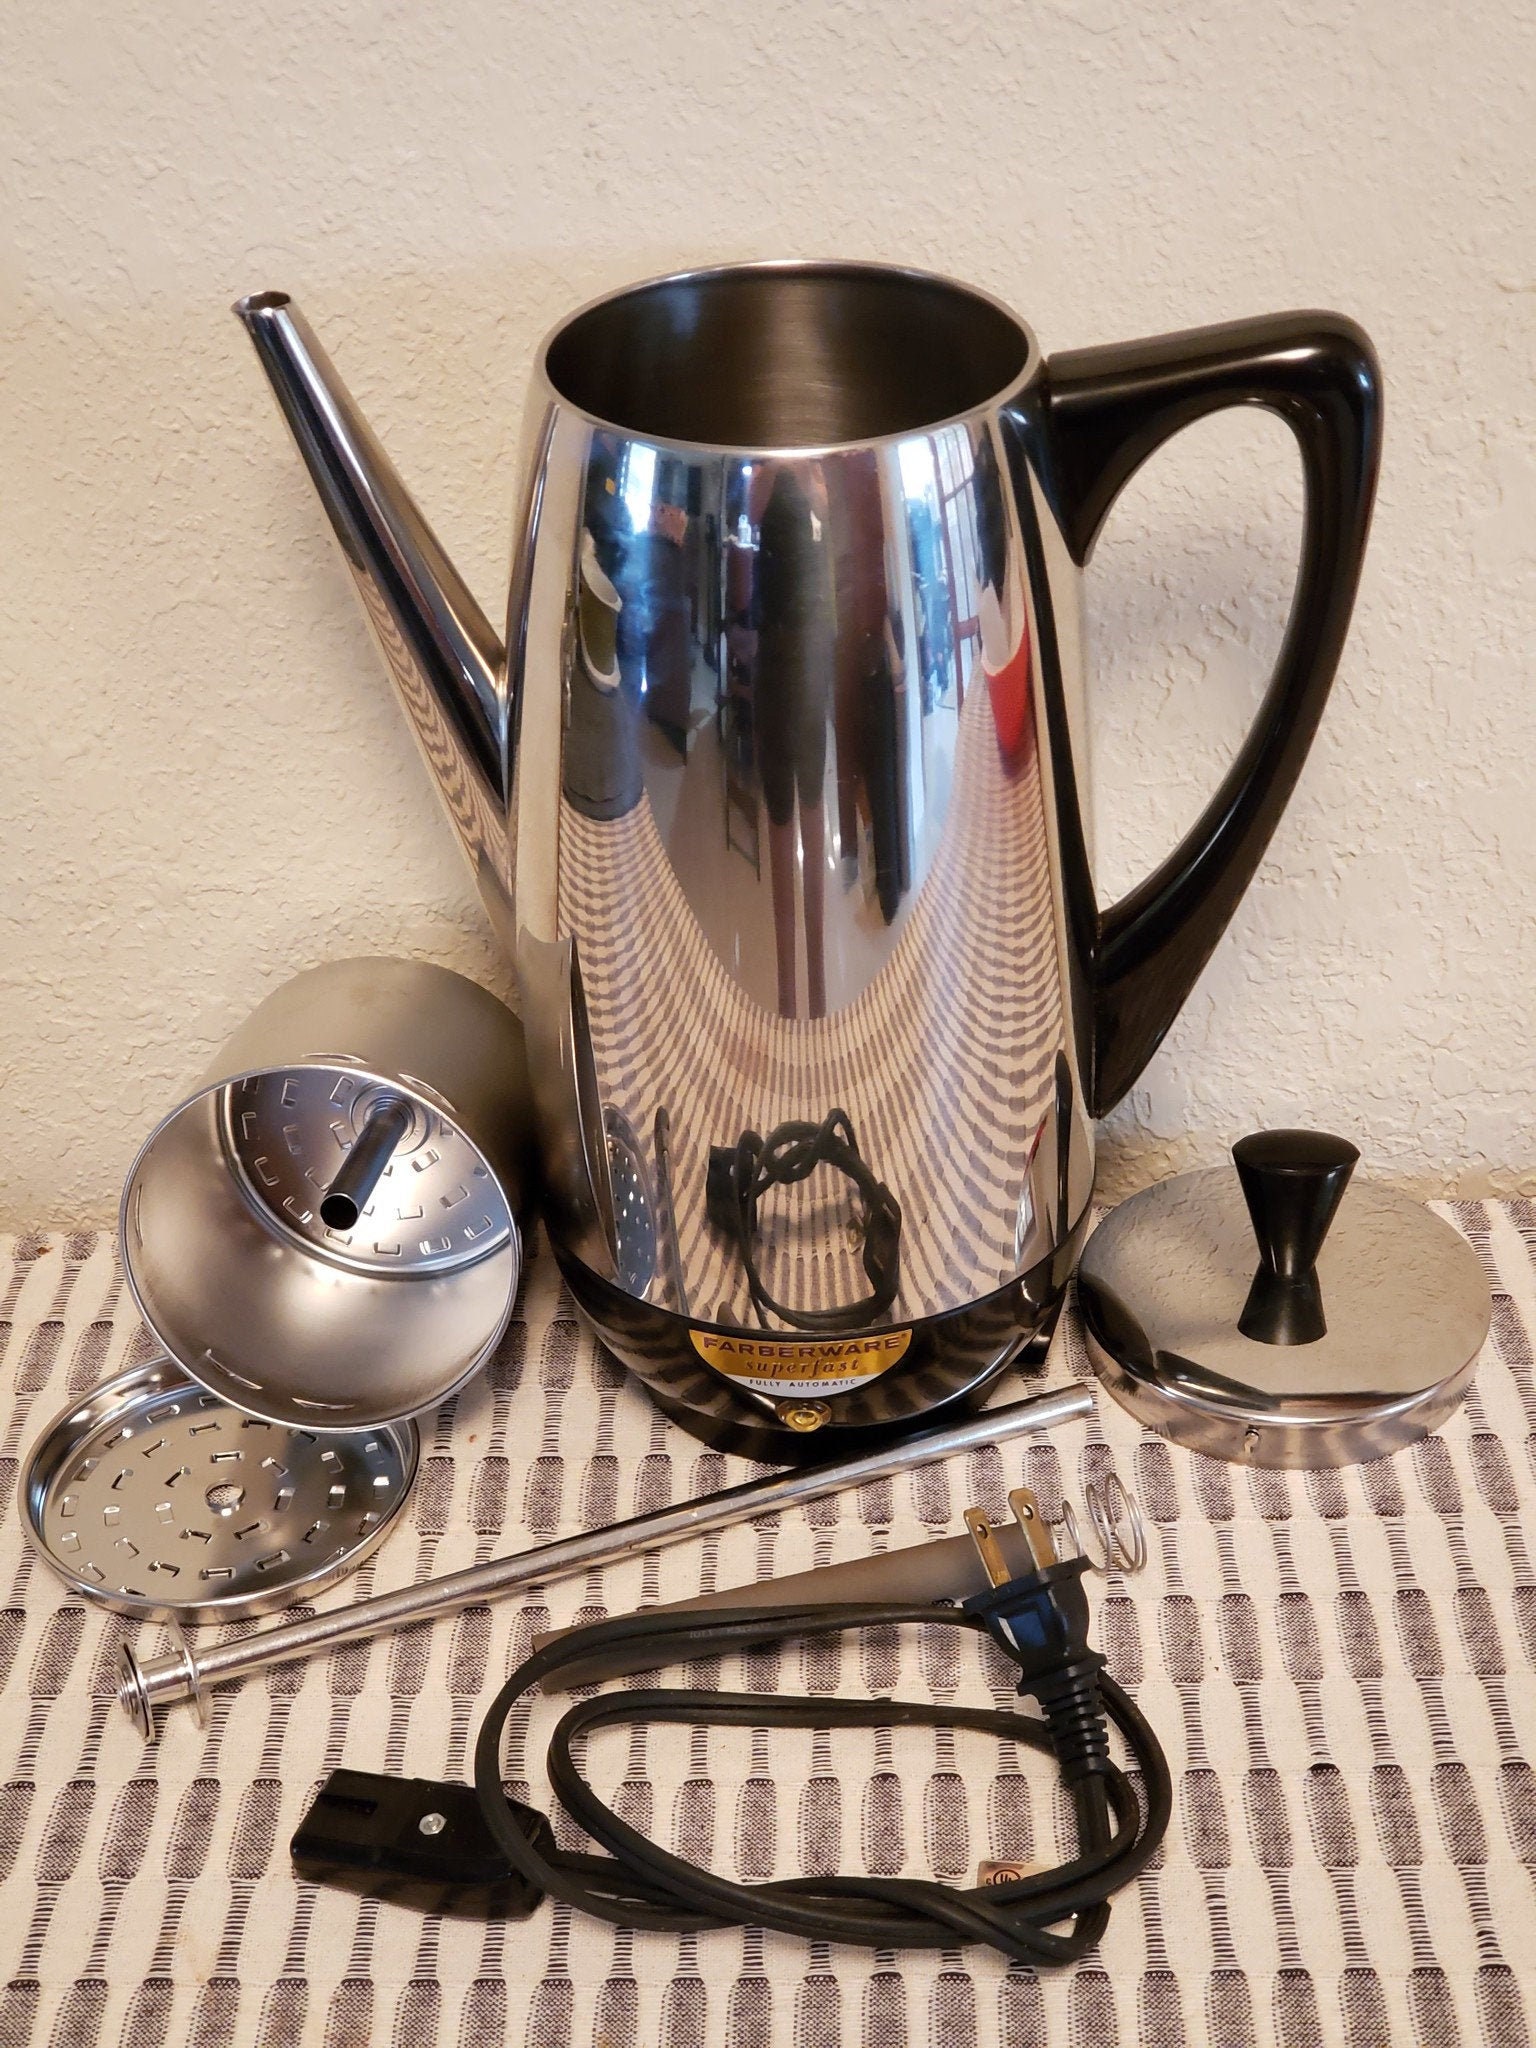 Farberware Stove Top Percolator Coffee Pot 4-8 Cup Stainless Steel